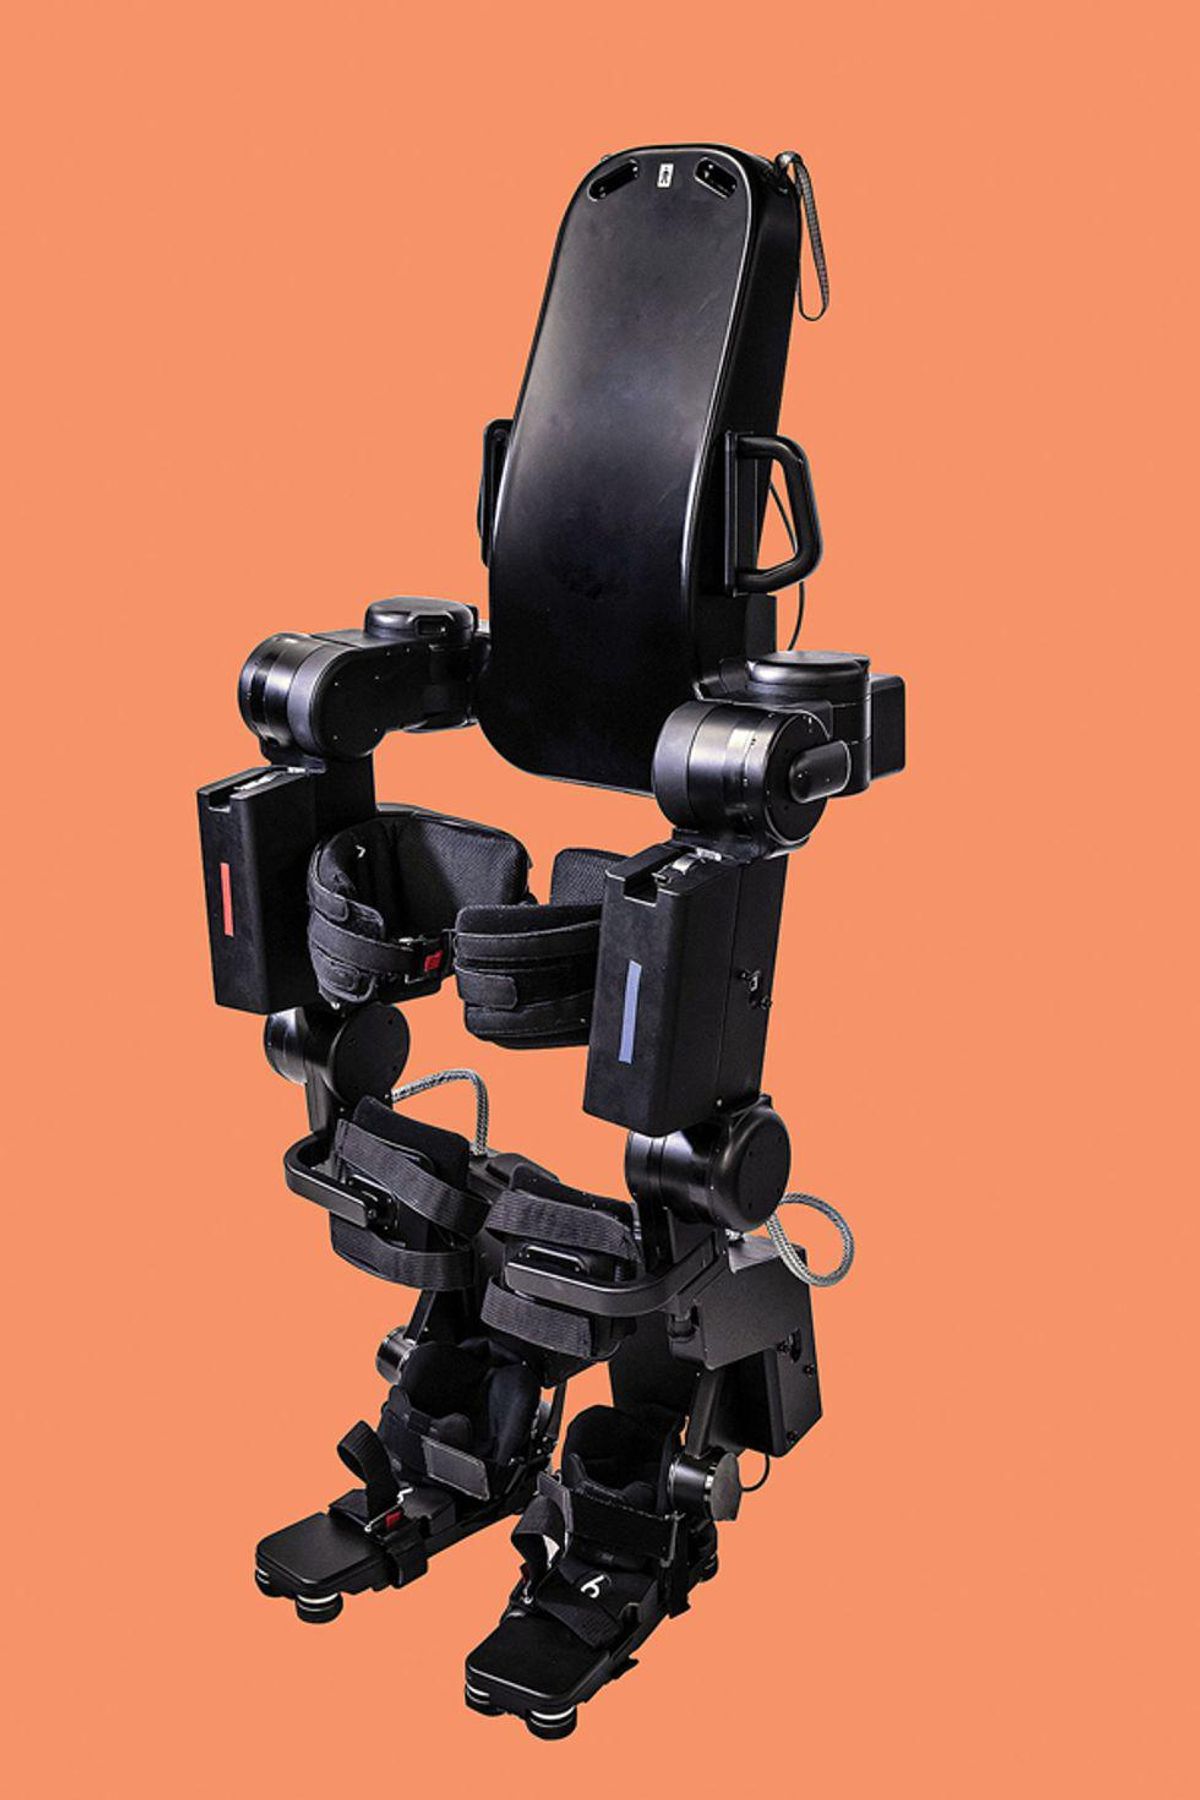 Caltech lower-body exoskeleton